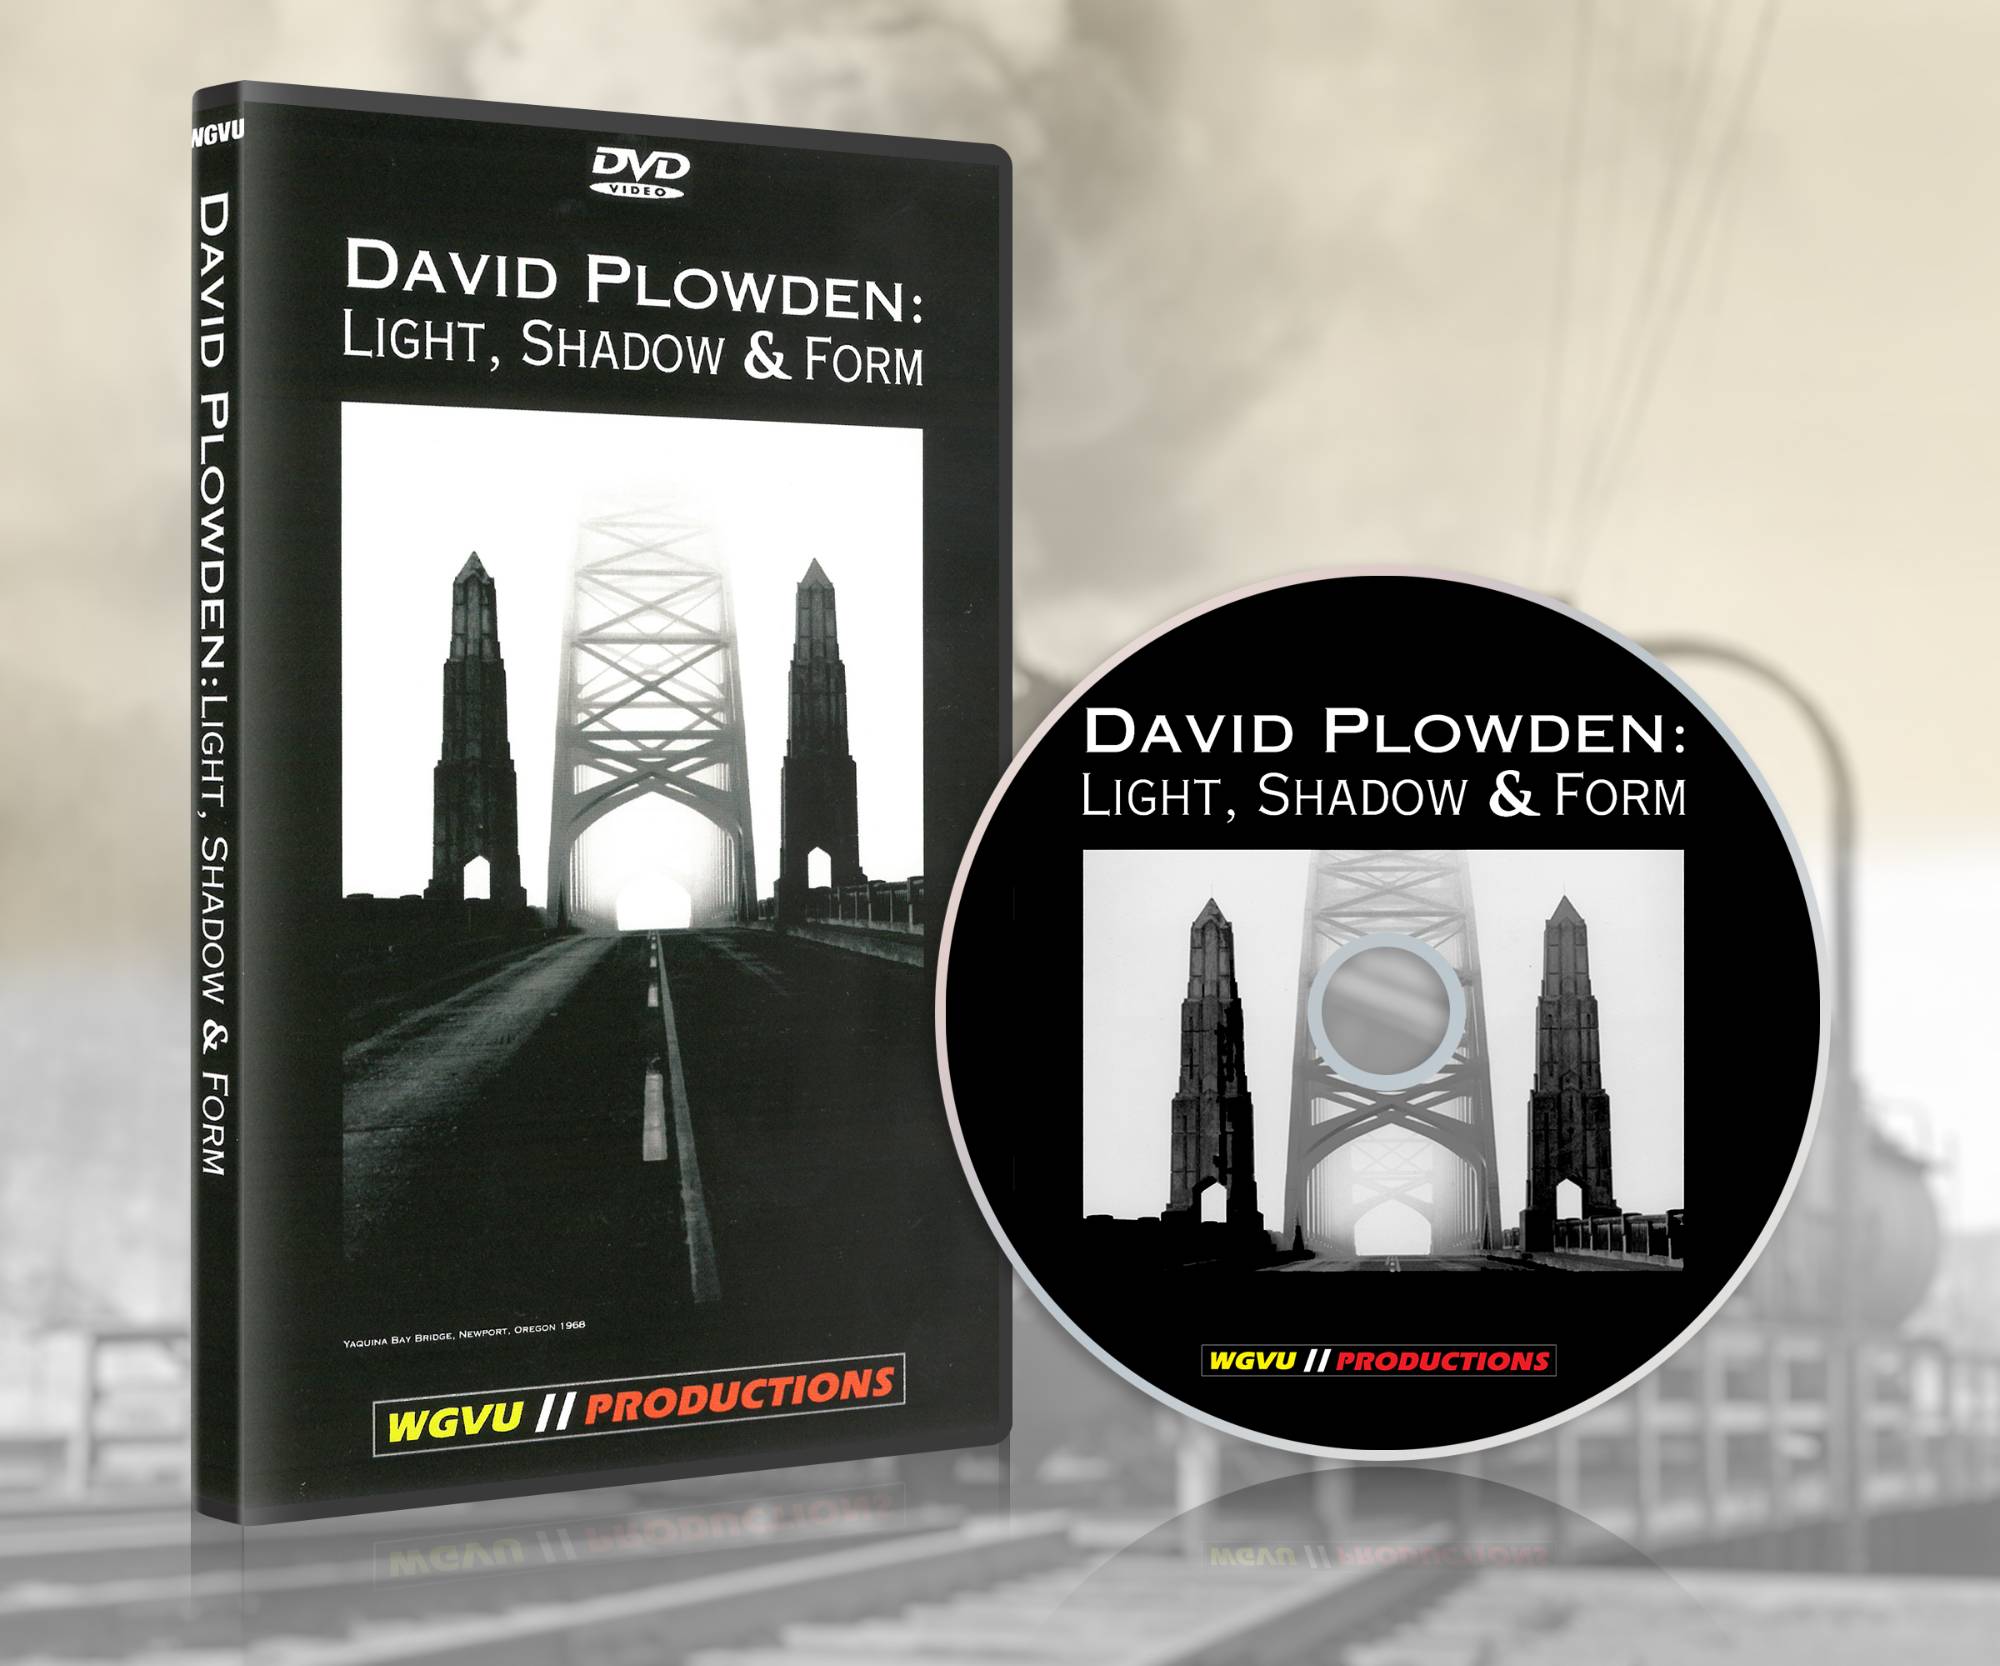 David Plowden: Light, Shadow & Form DVD Case